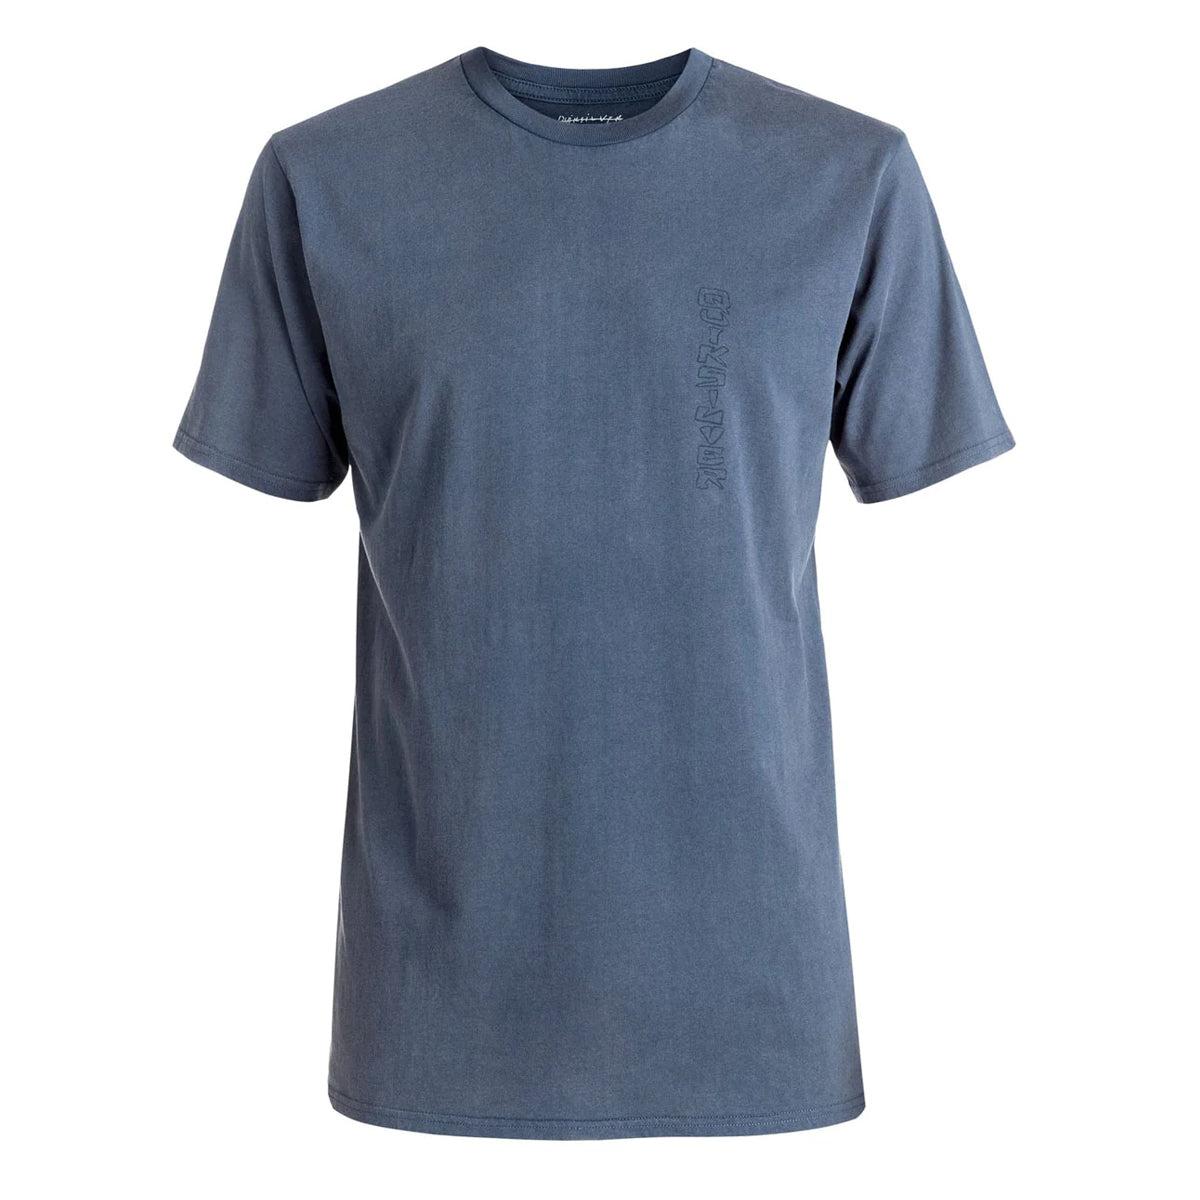 Quiksilver Shattered Men's Short-Sleeve Shirts